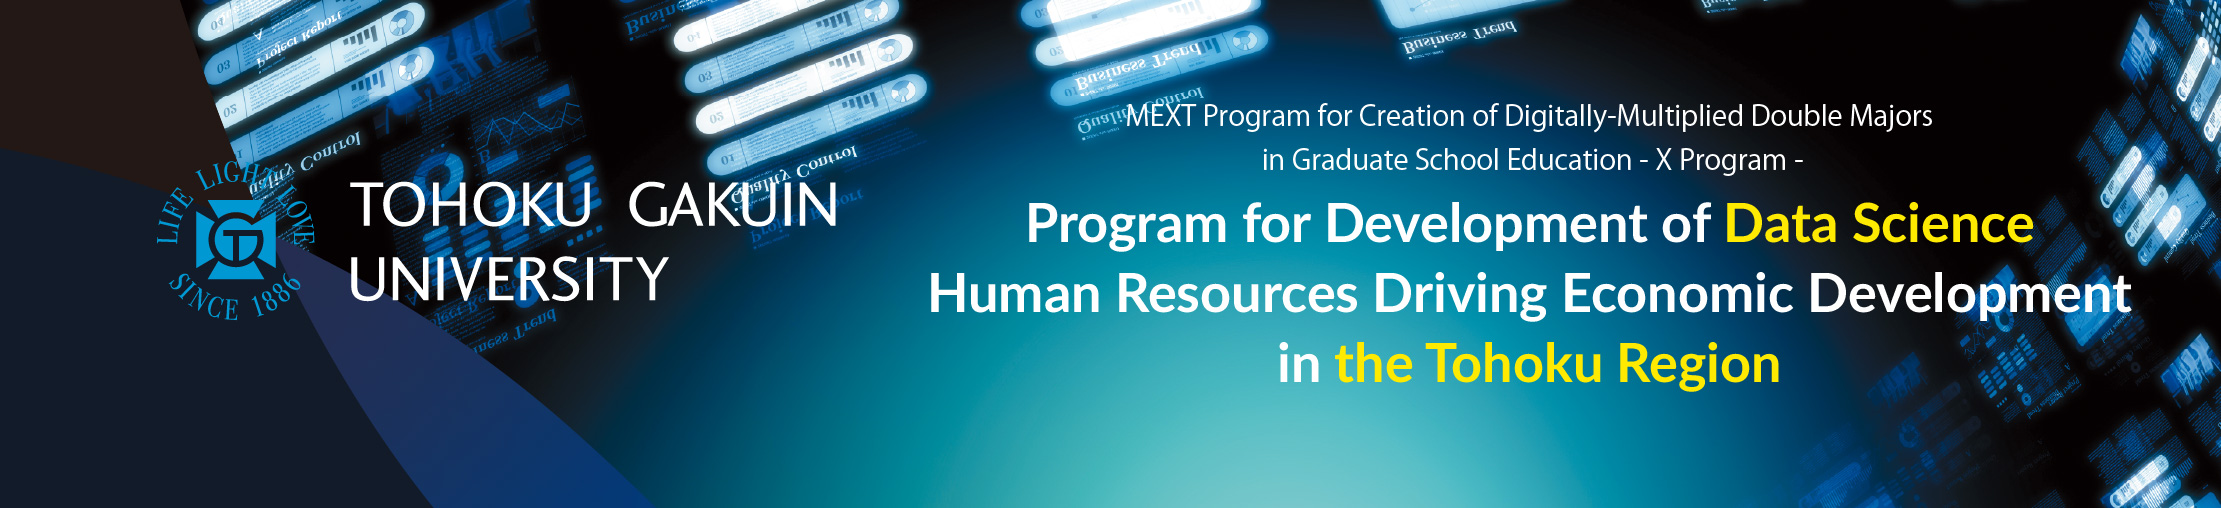 Program for Development of Data Science Human Resources Driving Economic Development in the Tohoku Region